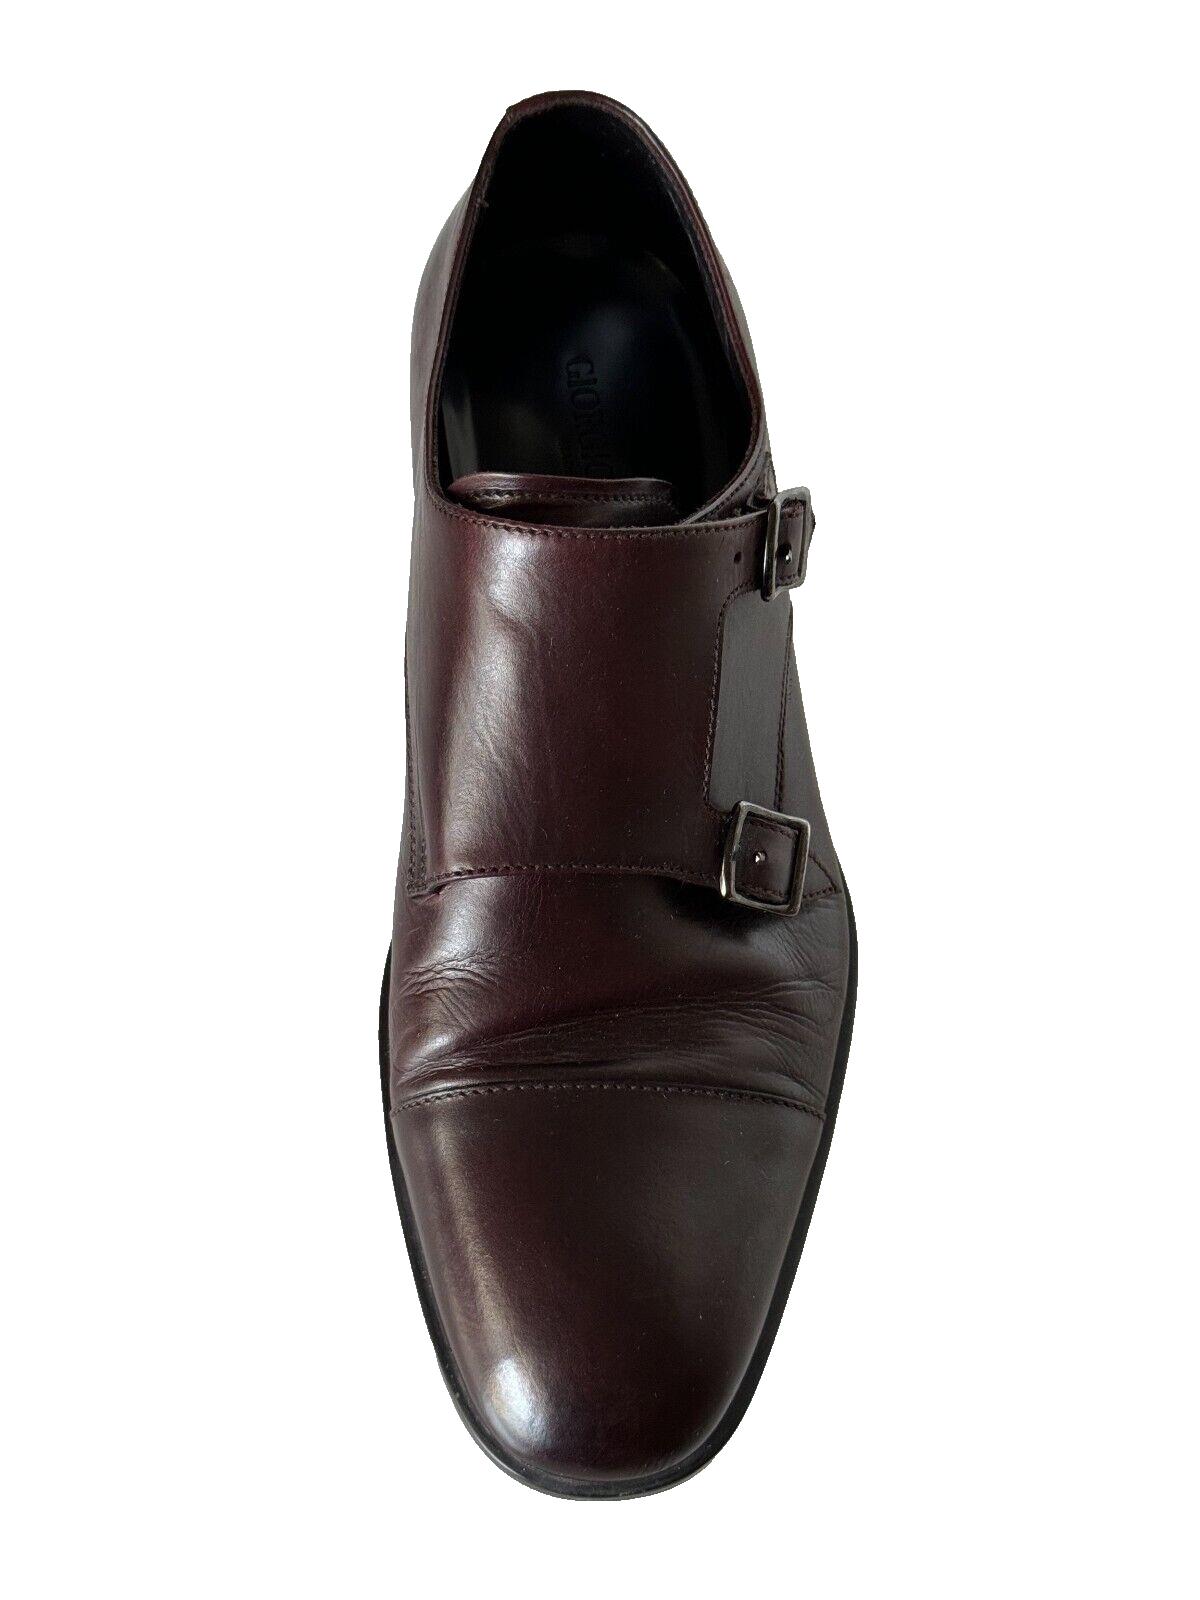 Giorgio Armani Men’s Brown Leather Monk Strap Shoes 9.5 US (8.5 IT) X2L072 Italy